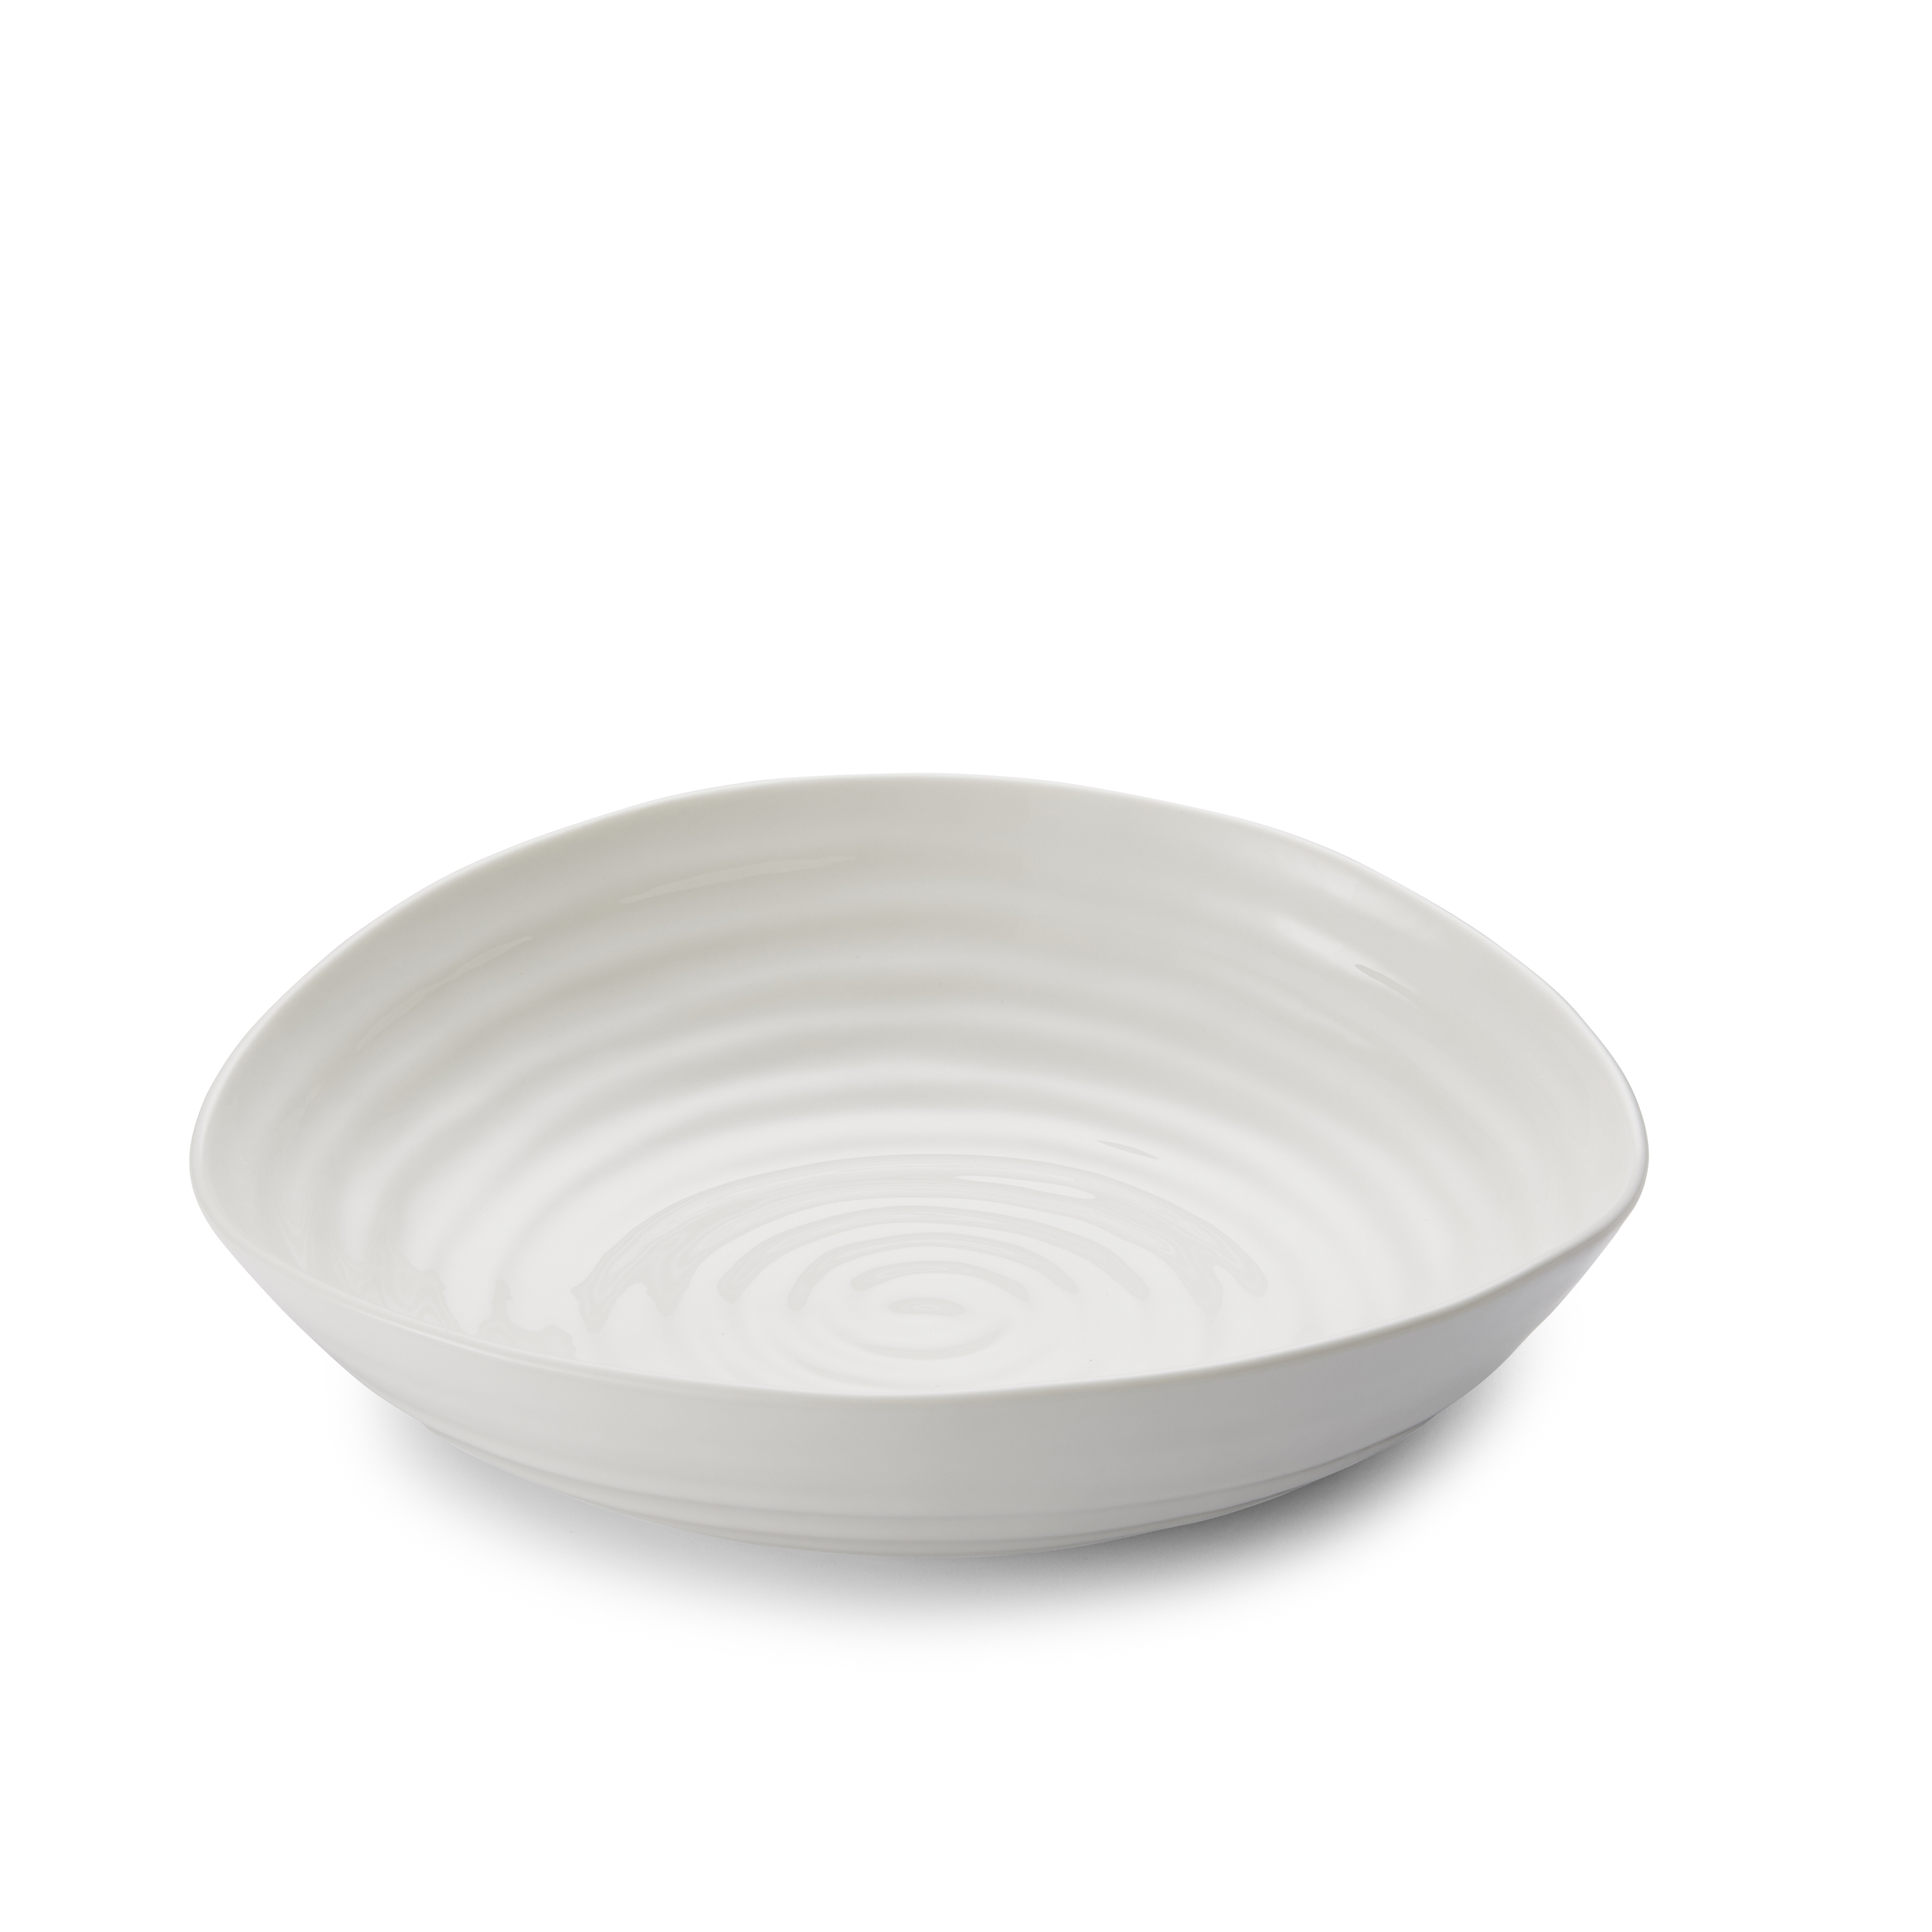 Sophie Conran Set of 4 Pasta Bowls, White image number null